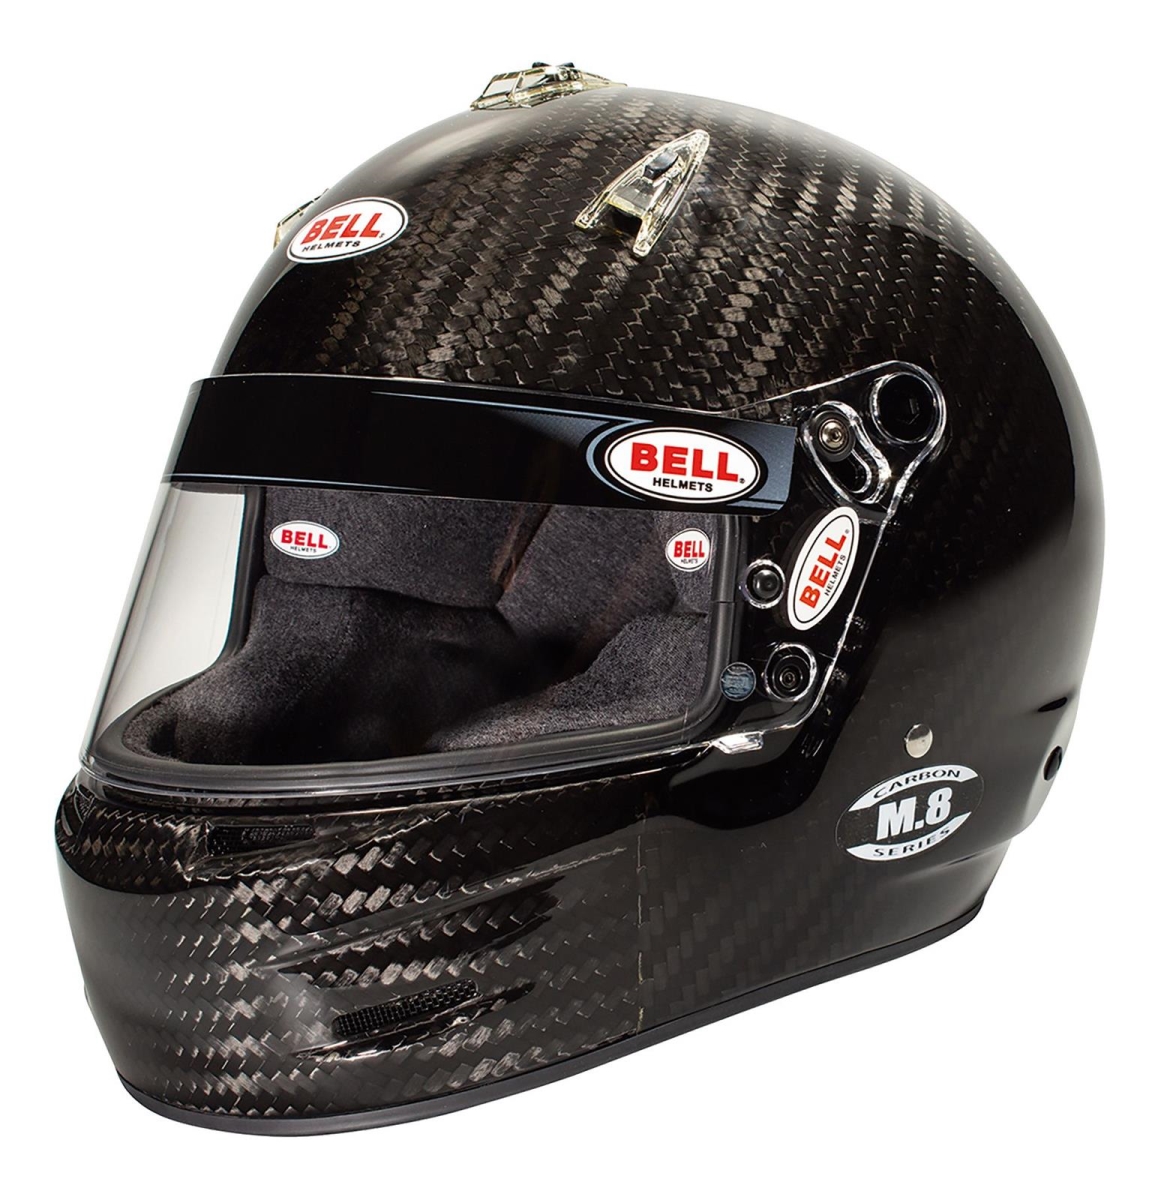 Picture of Bell Helmets BEL1208A01 M8 Carbon SA2020 - FIA8859 Helmet - Size 57